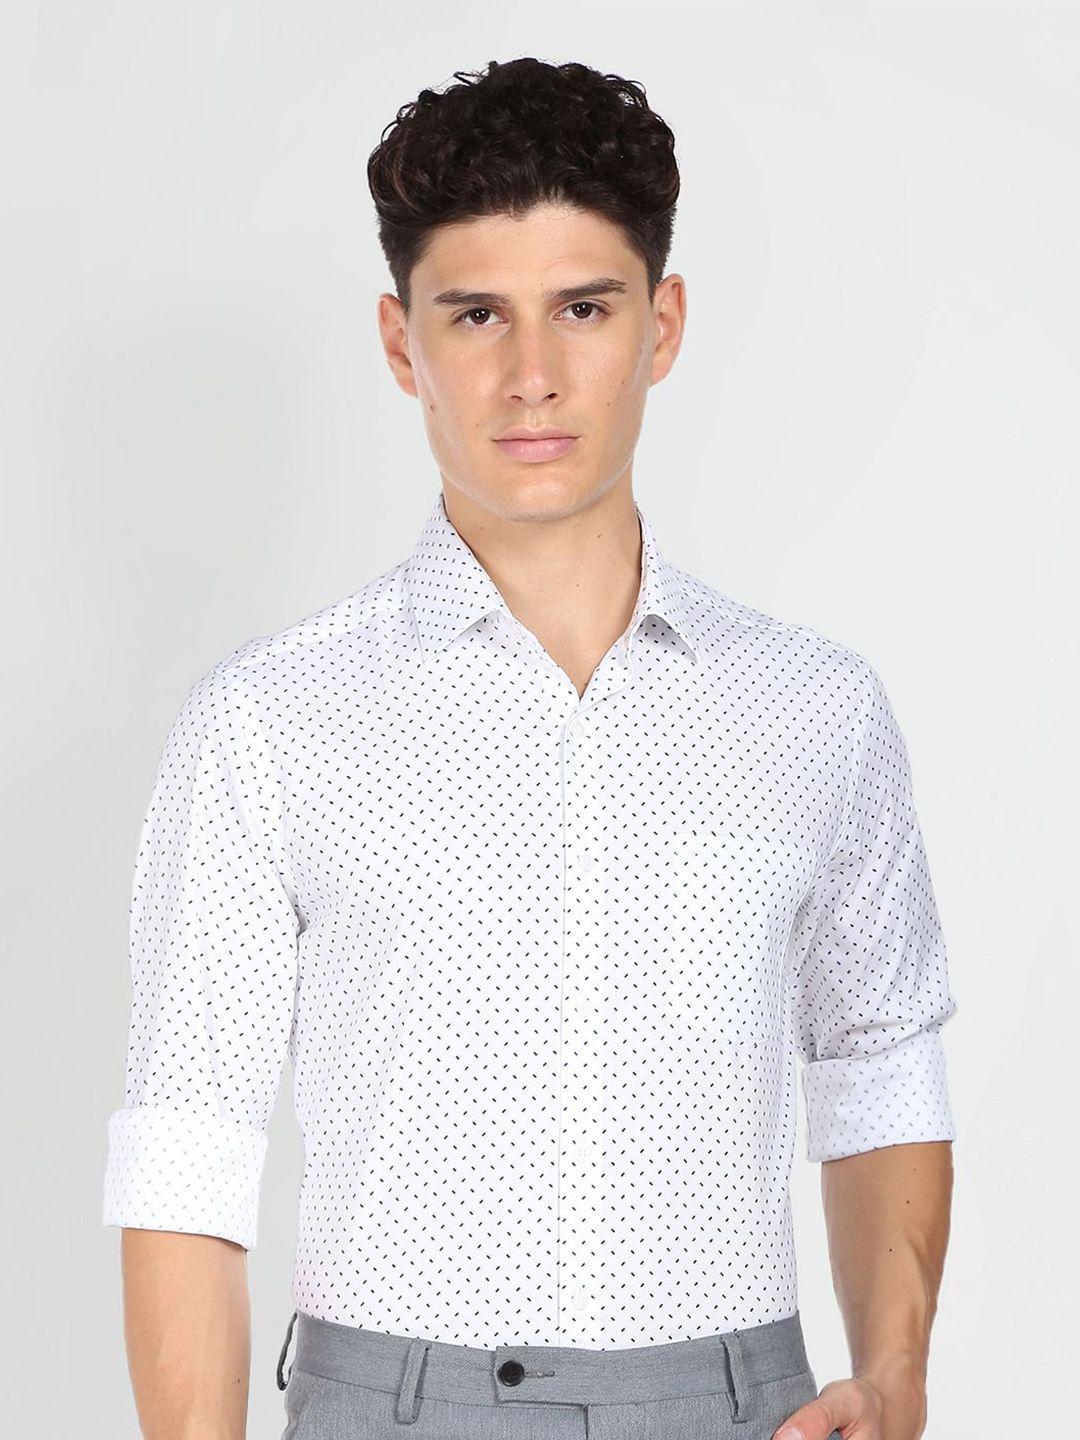 arrow geometric printed pure cotton slim fit formal shirt